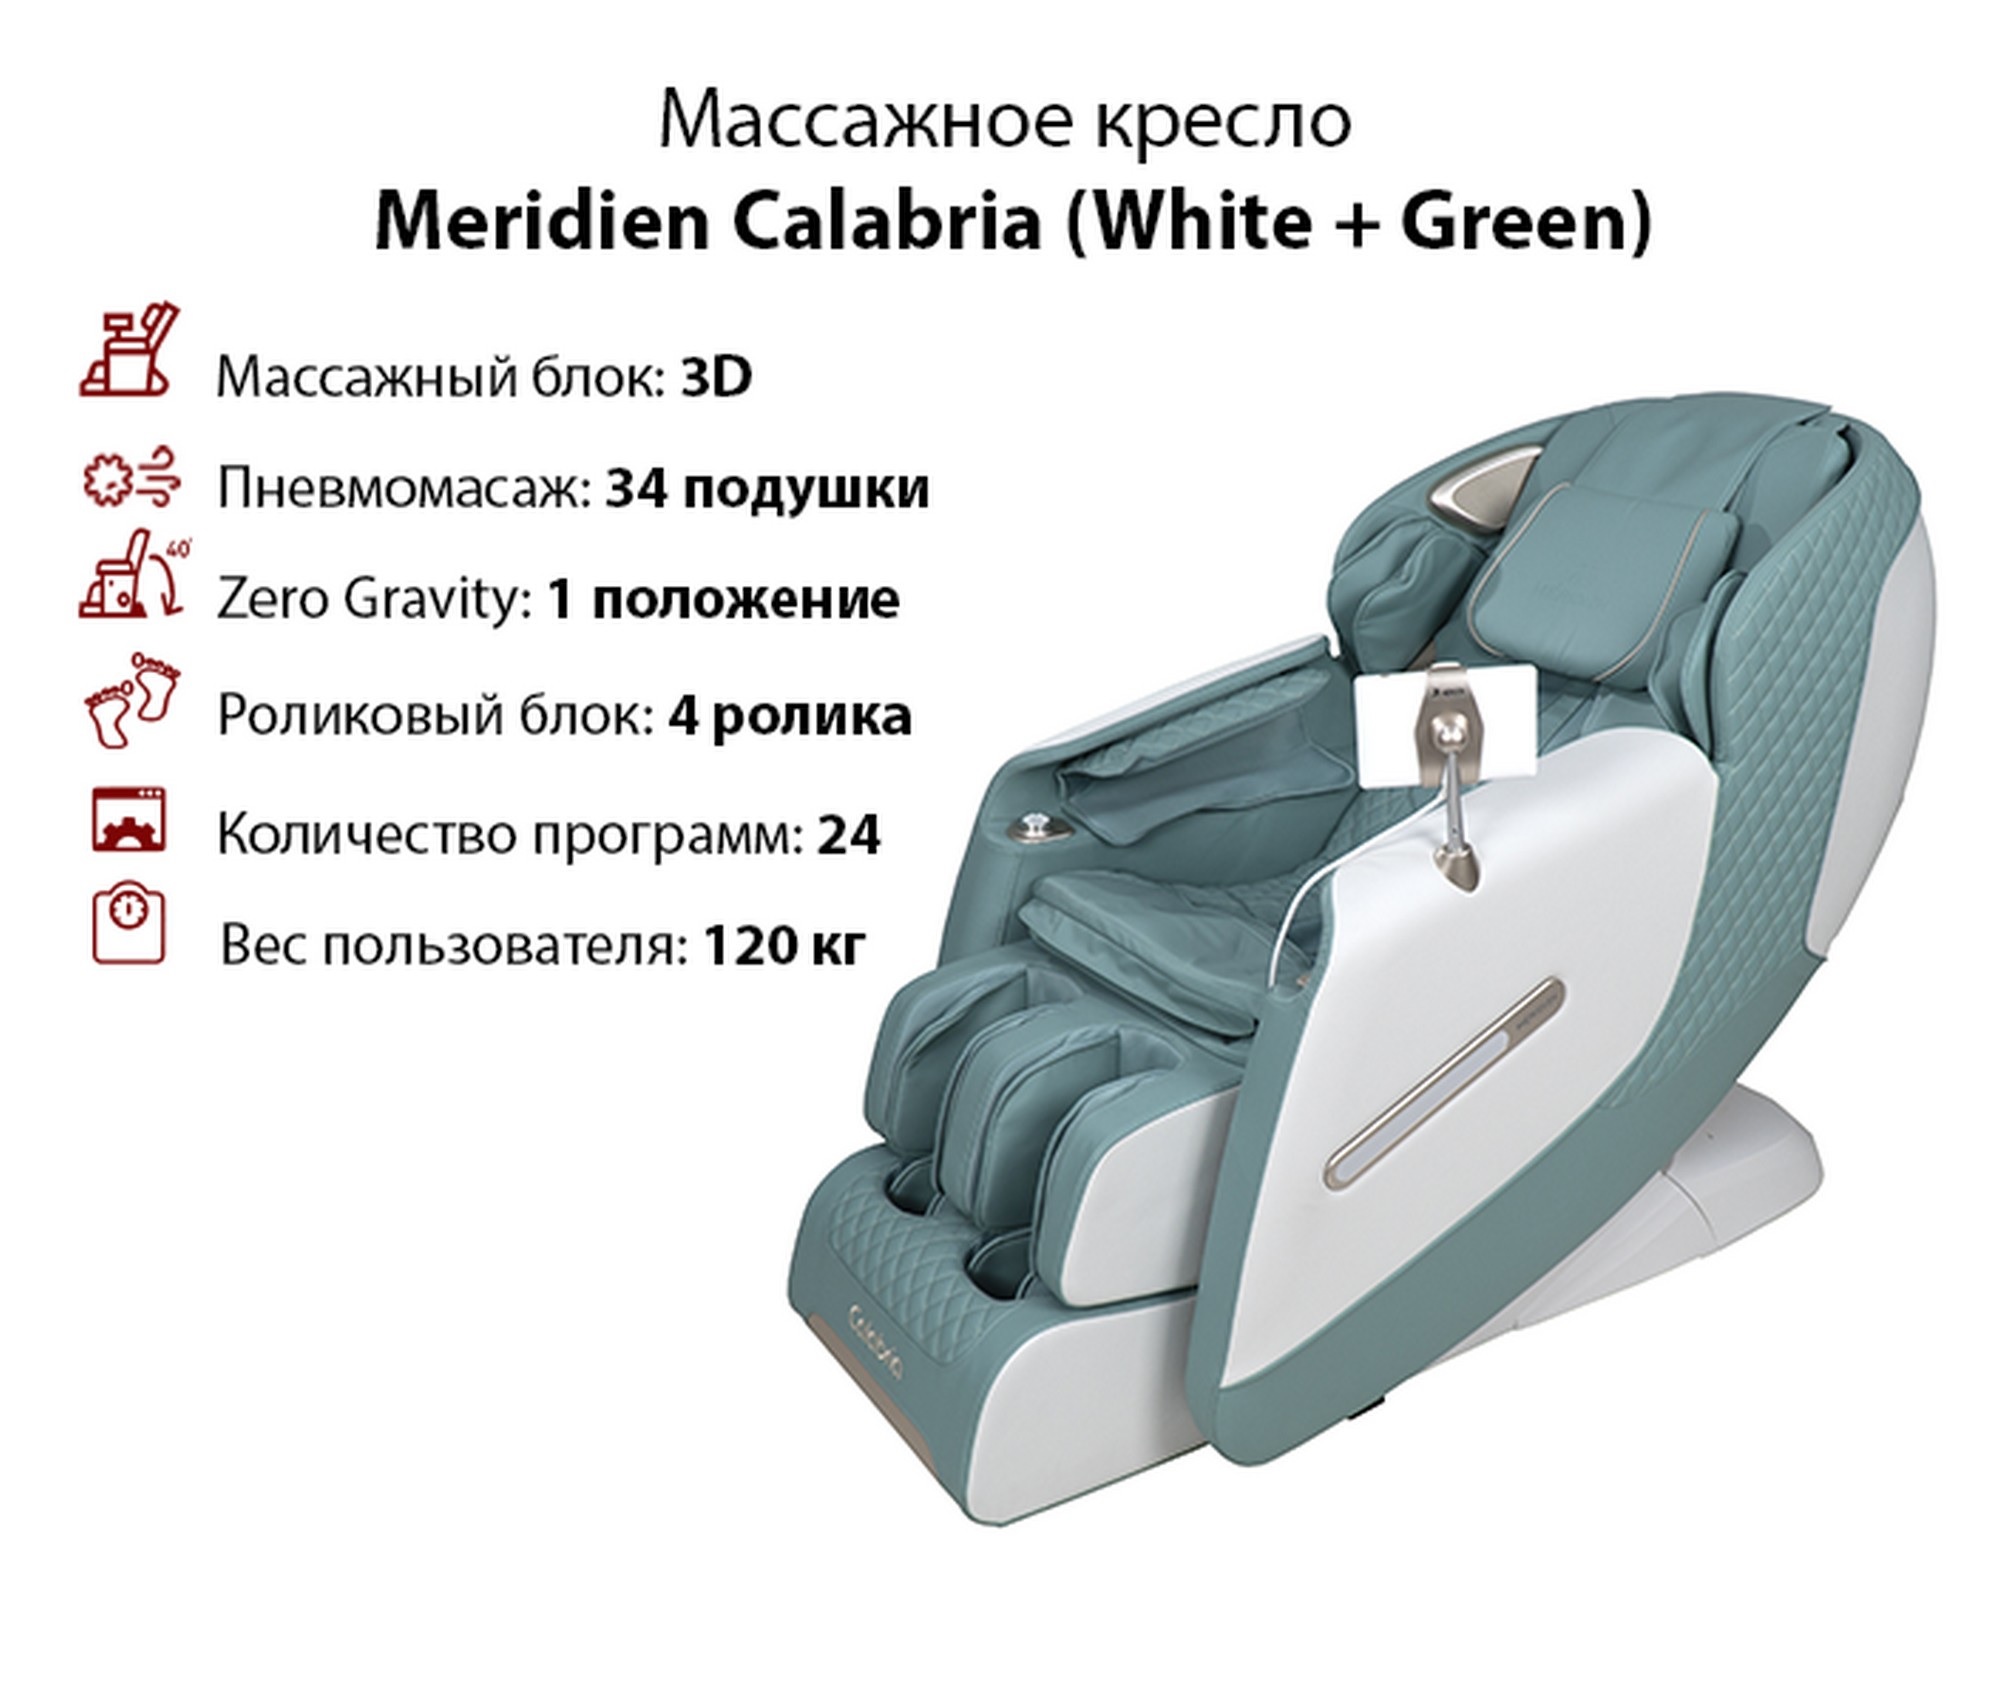 Массажное кресло Meridien Calabria White + Green 2000_1702